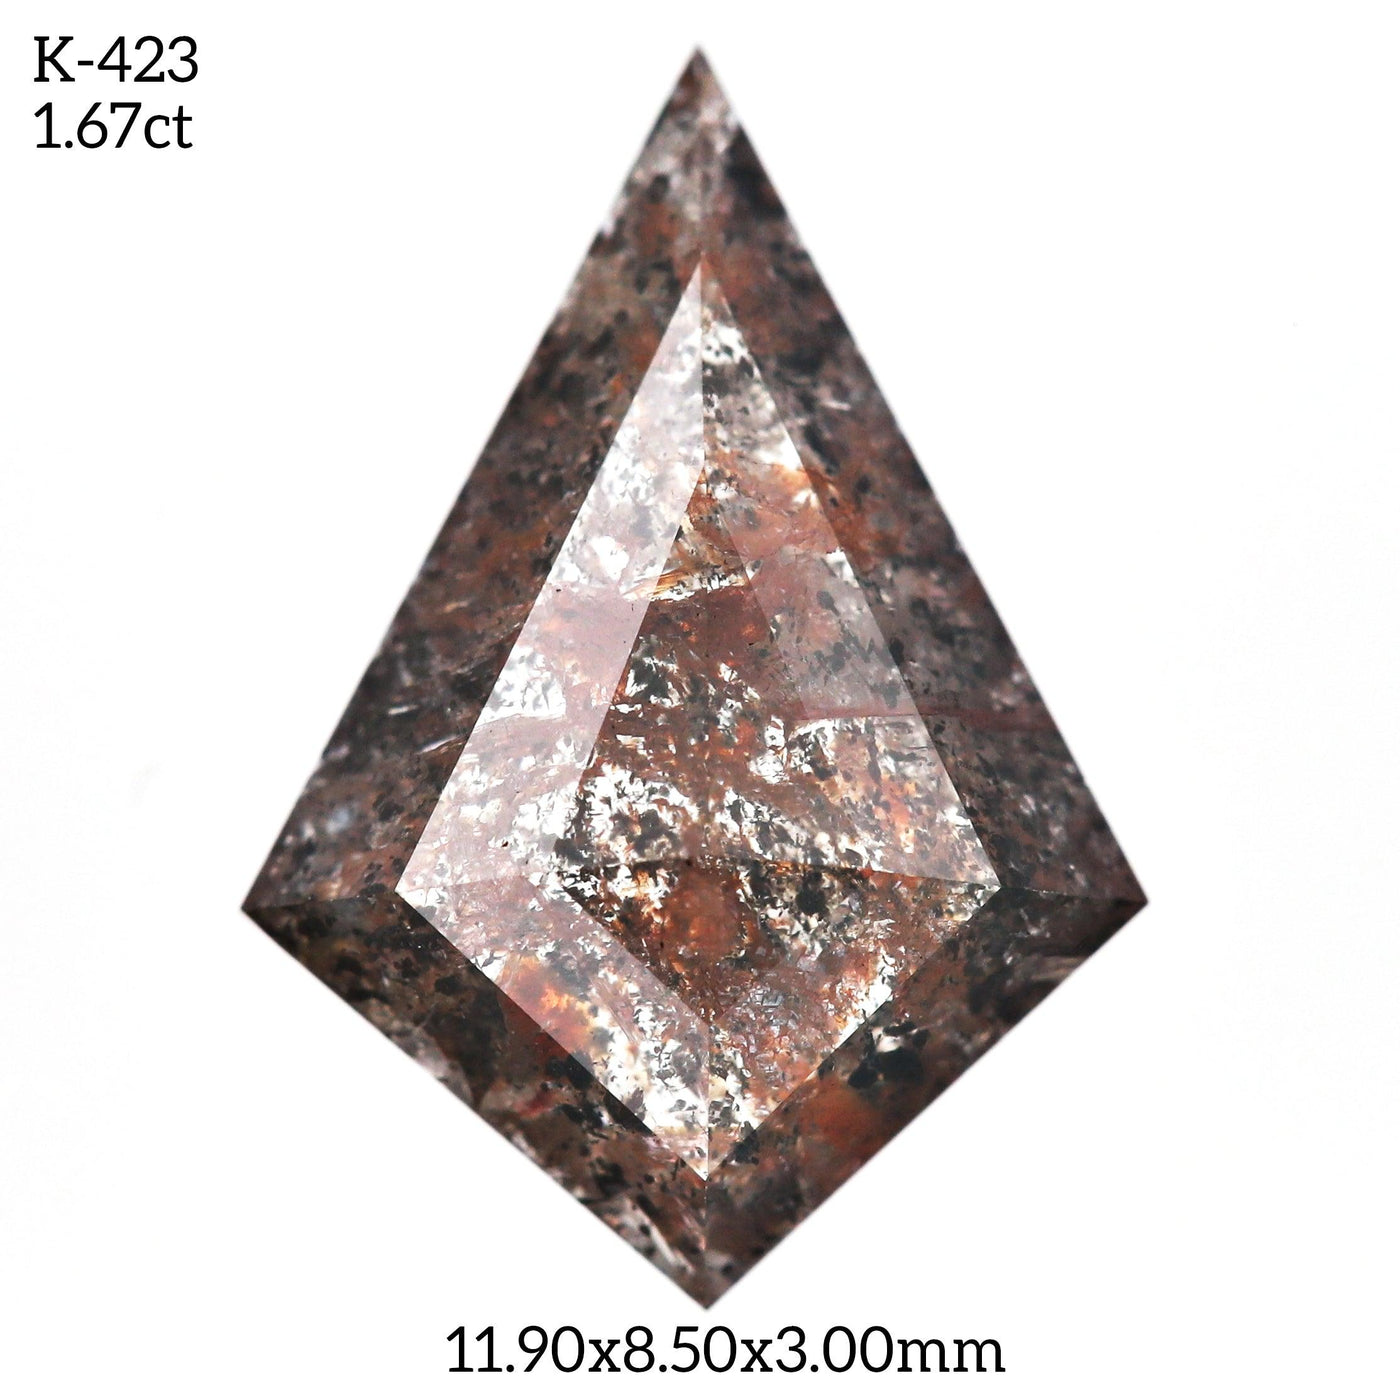 K423 - Salt and pepper kite diamond - Rubysta